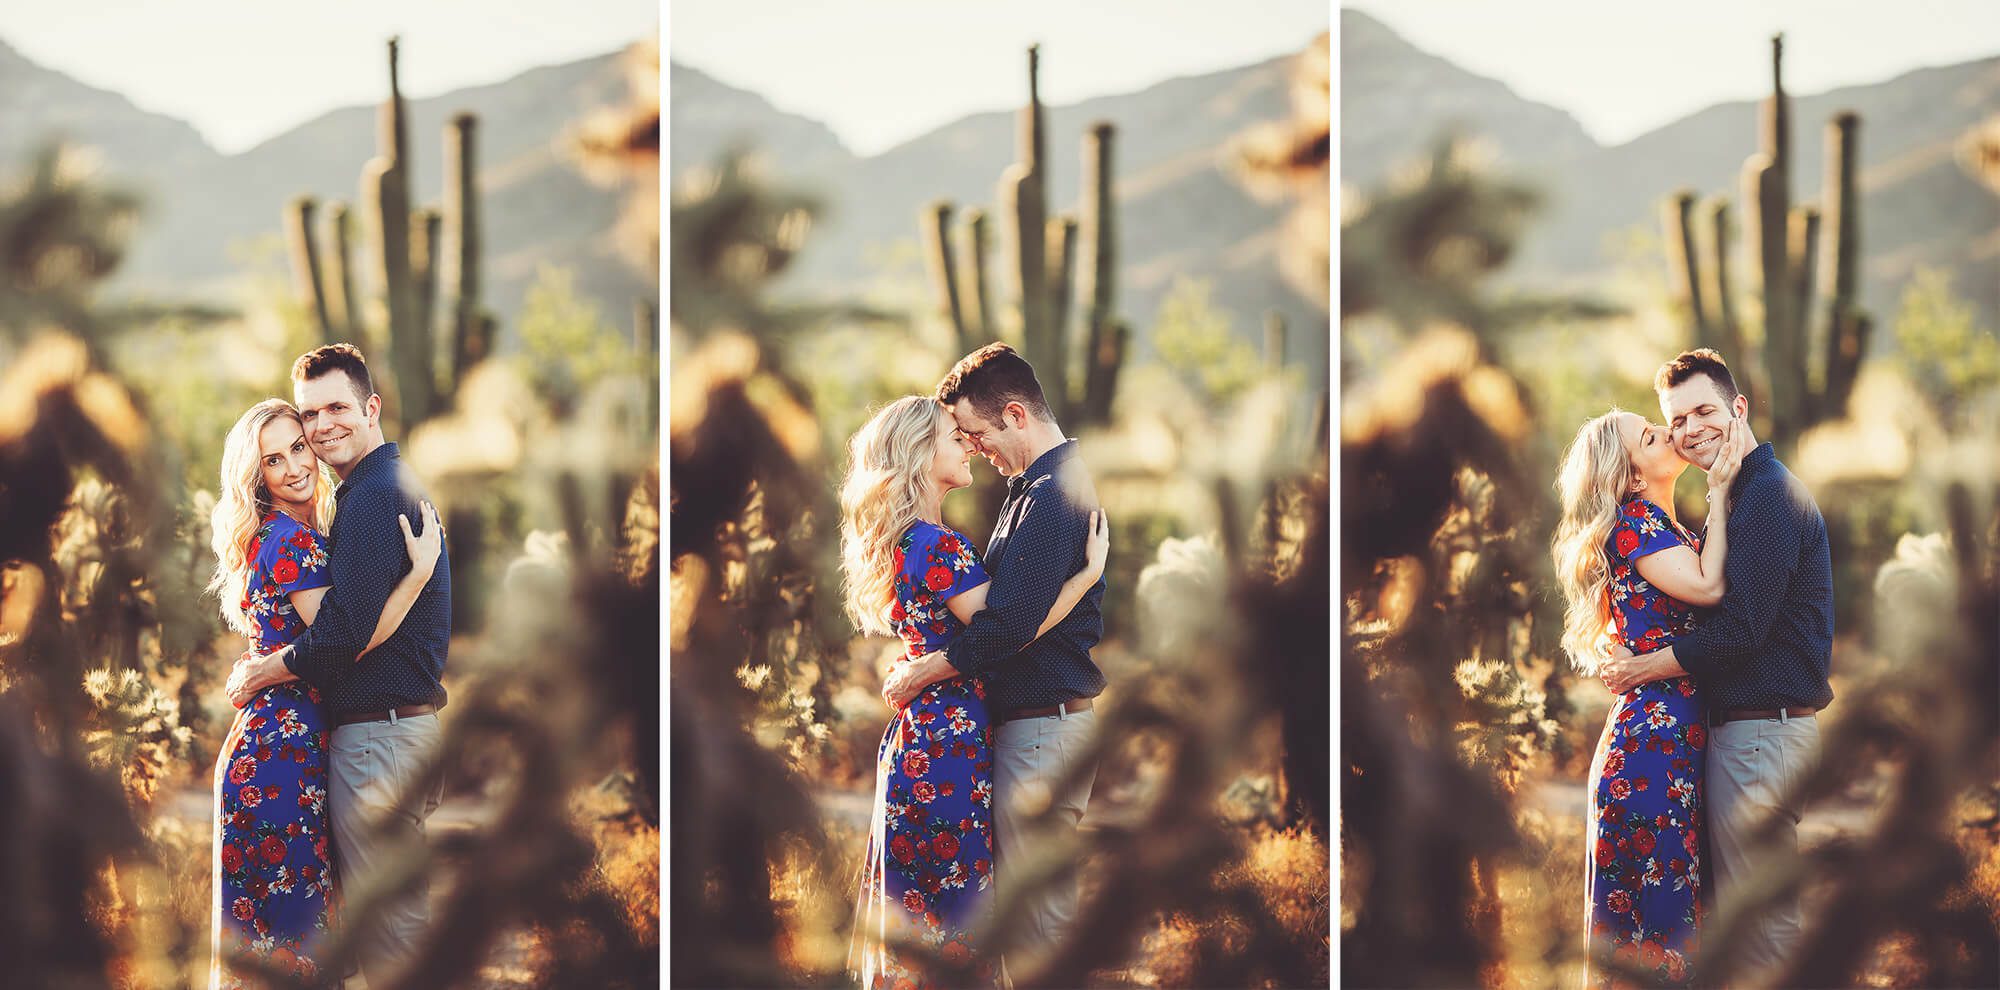 Fun kisses and snuggles from Shaun and Ally while framed by jumping cactus at Sabino Canyon